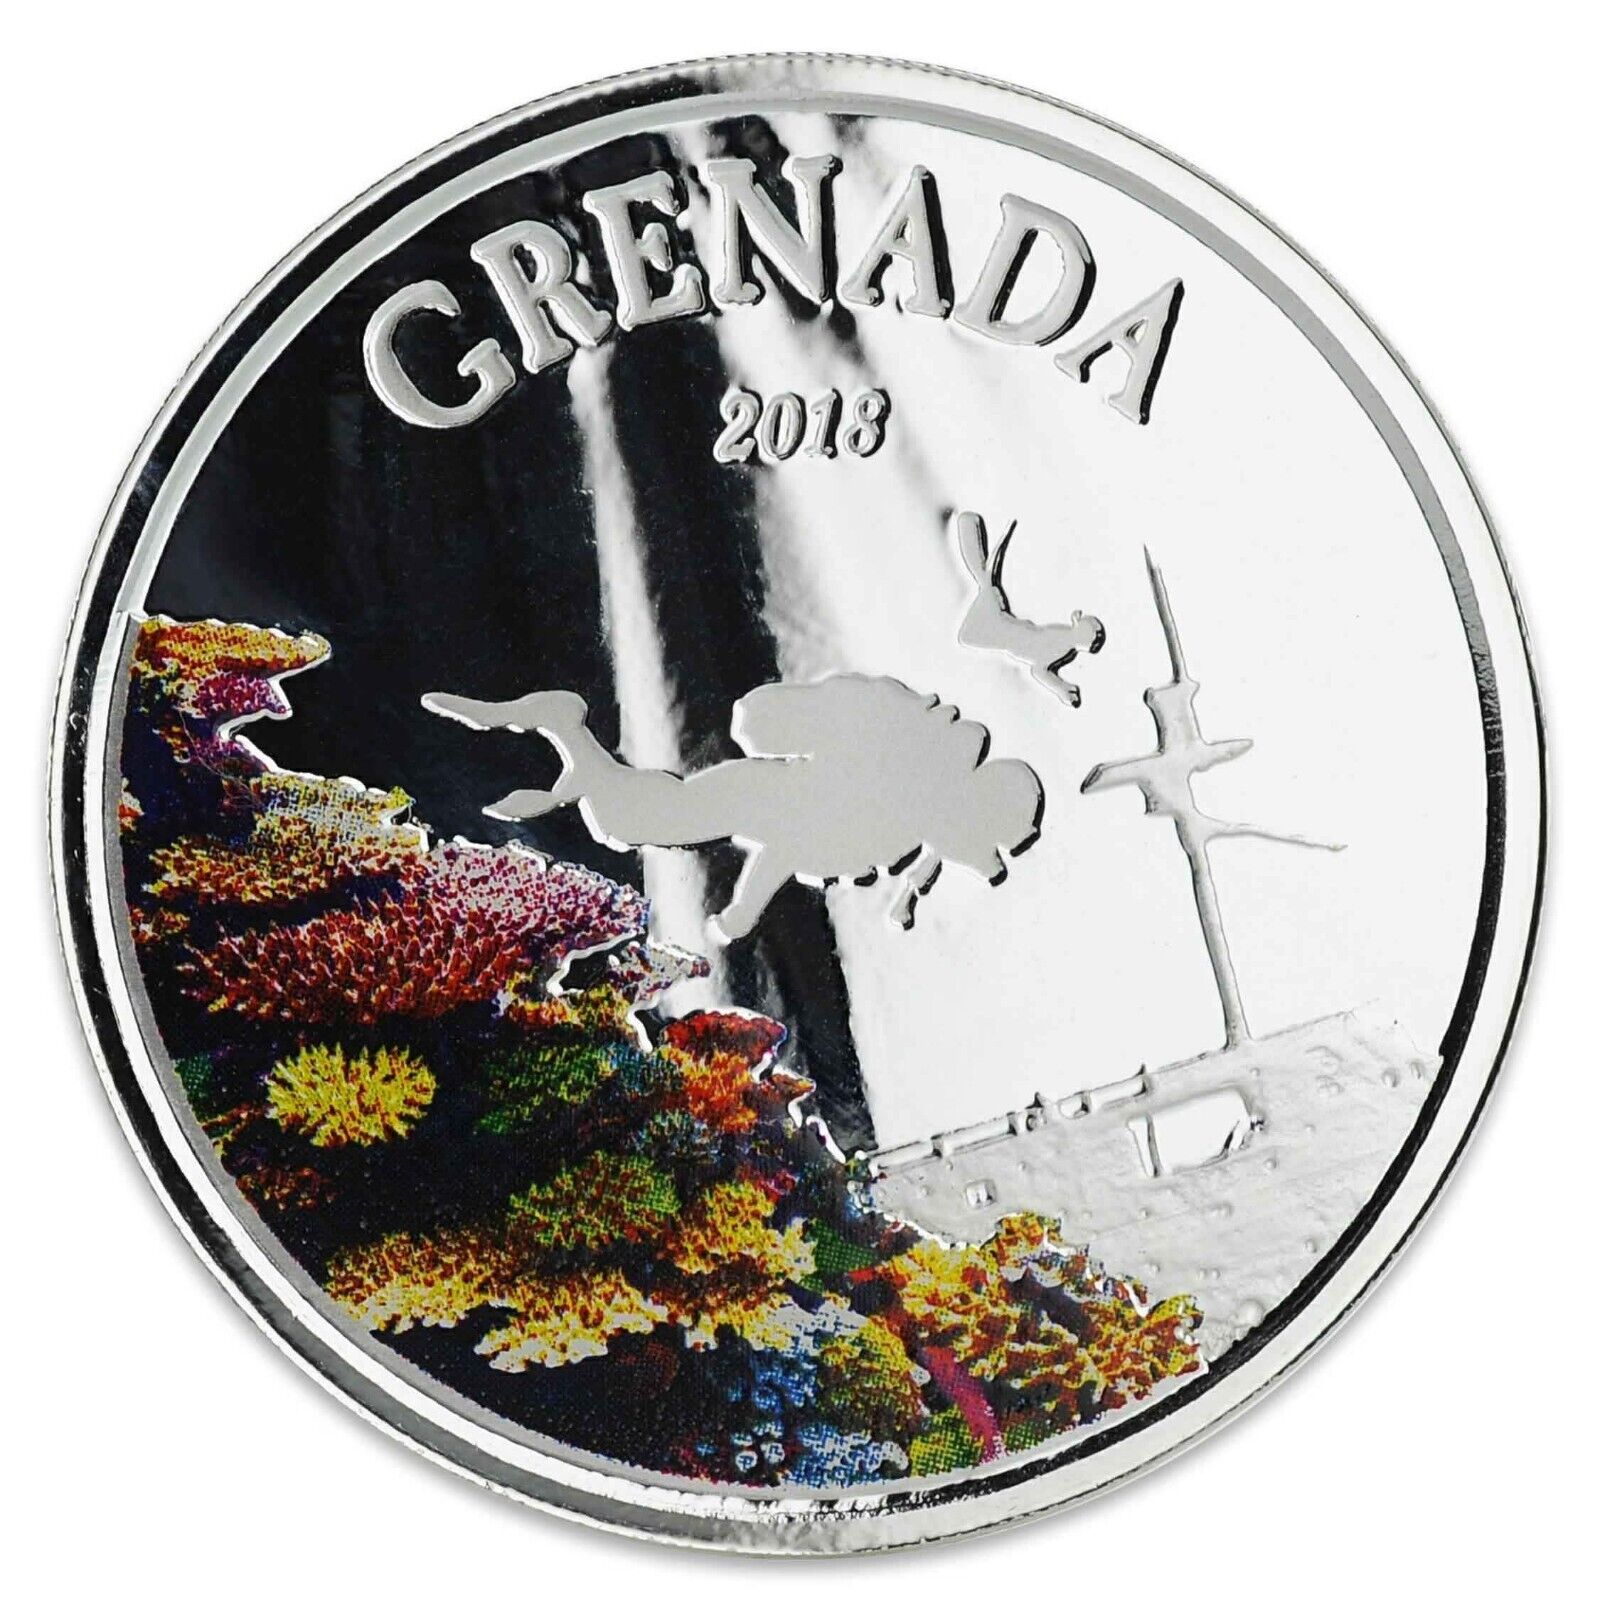 1 Oz Silver Coin 2018 EC8 Grenada $2 Scottsdale Mint Color Proof Diving Paradise-classypw.com-1